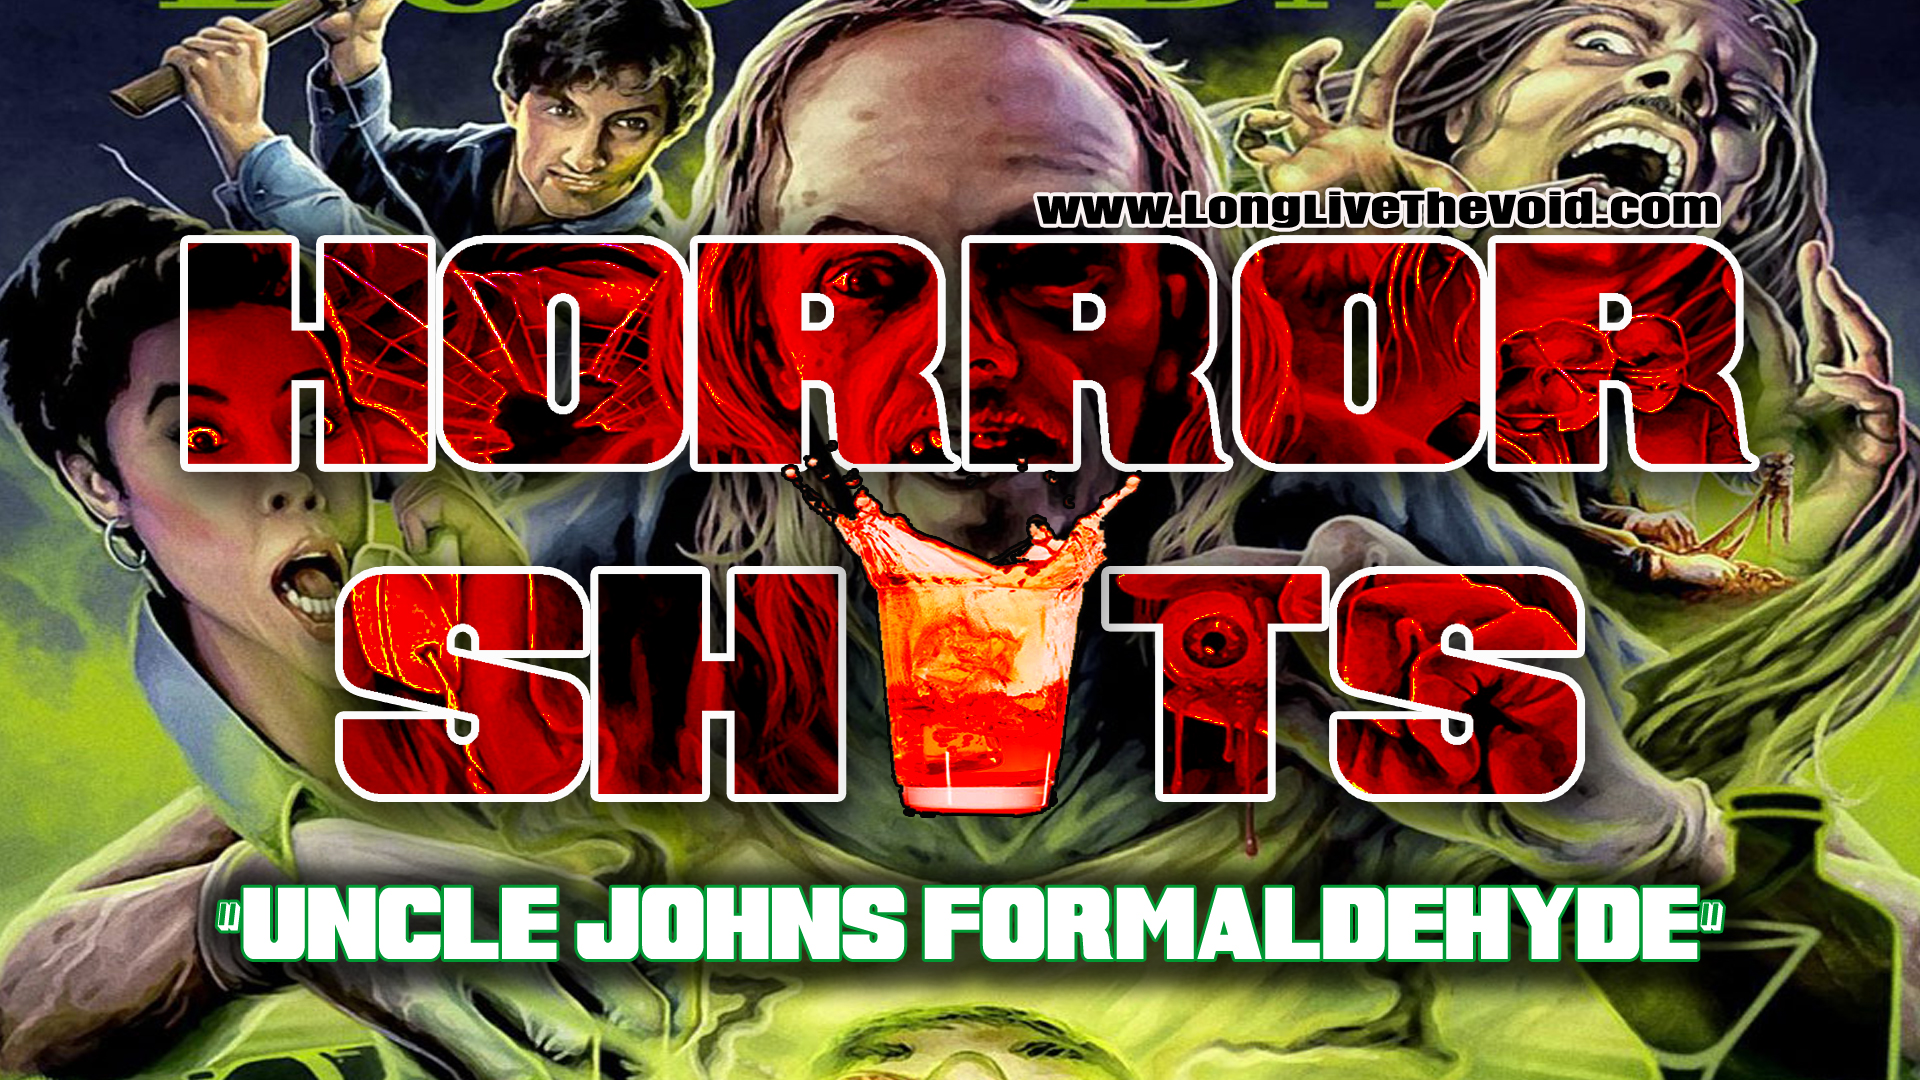 John Carpenter, Carpenter, Horror, Horror Movies, HD wallpaper